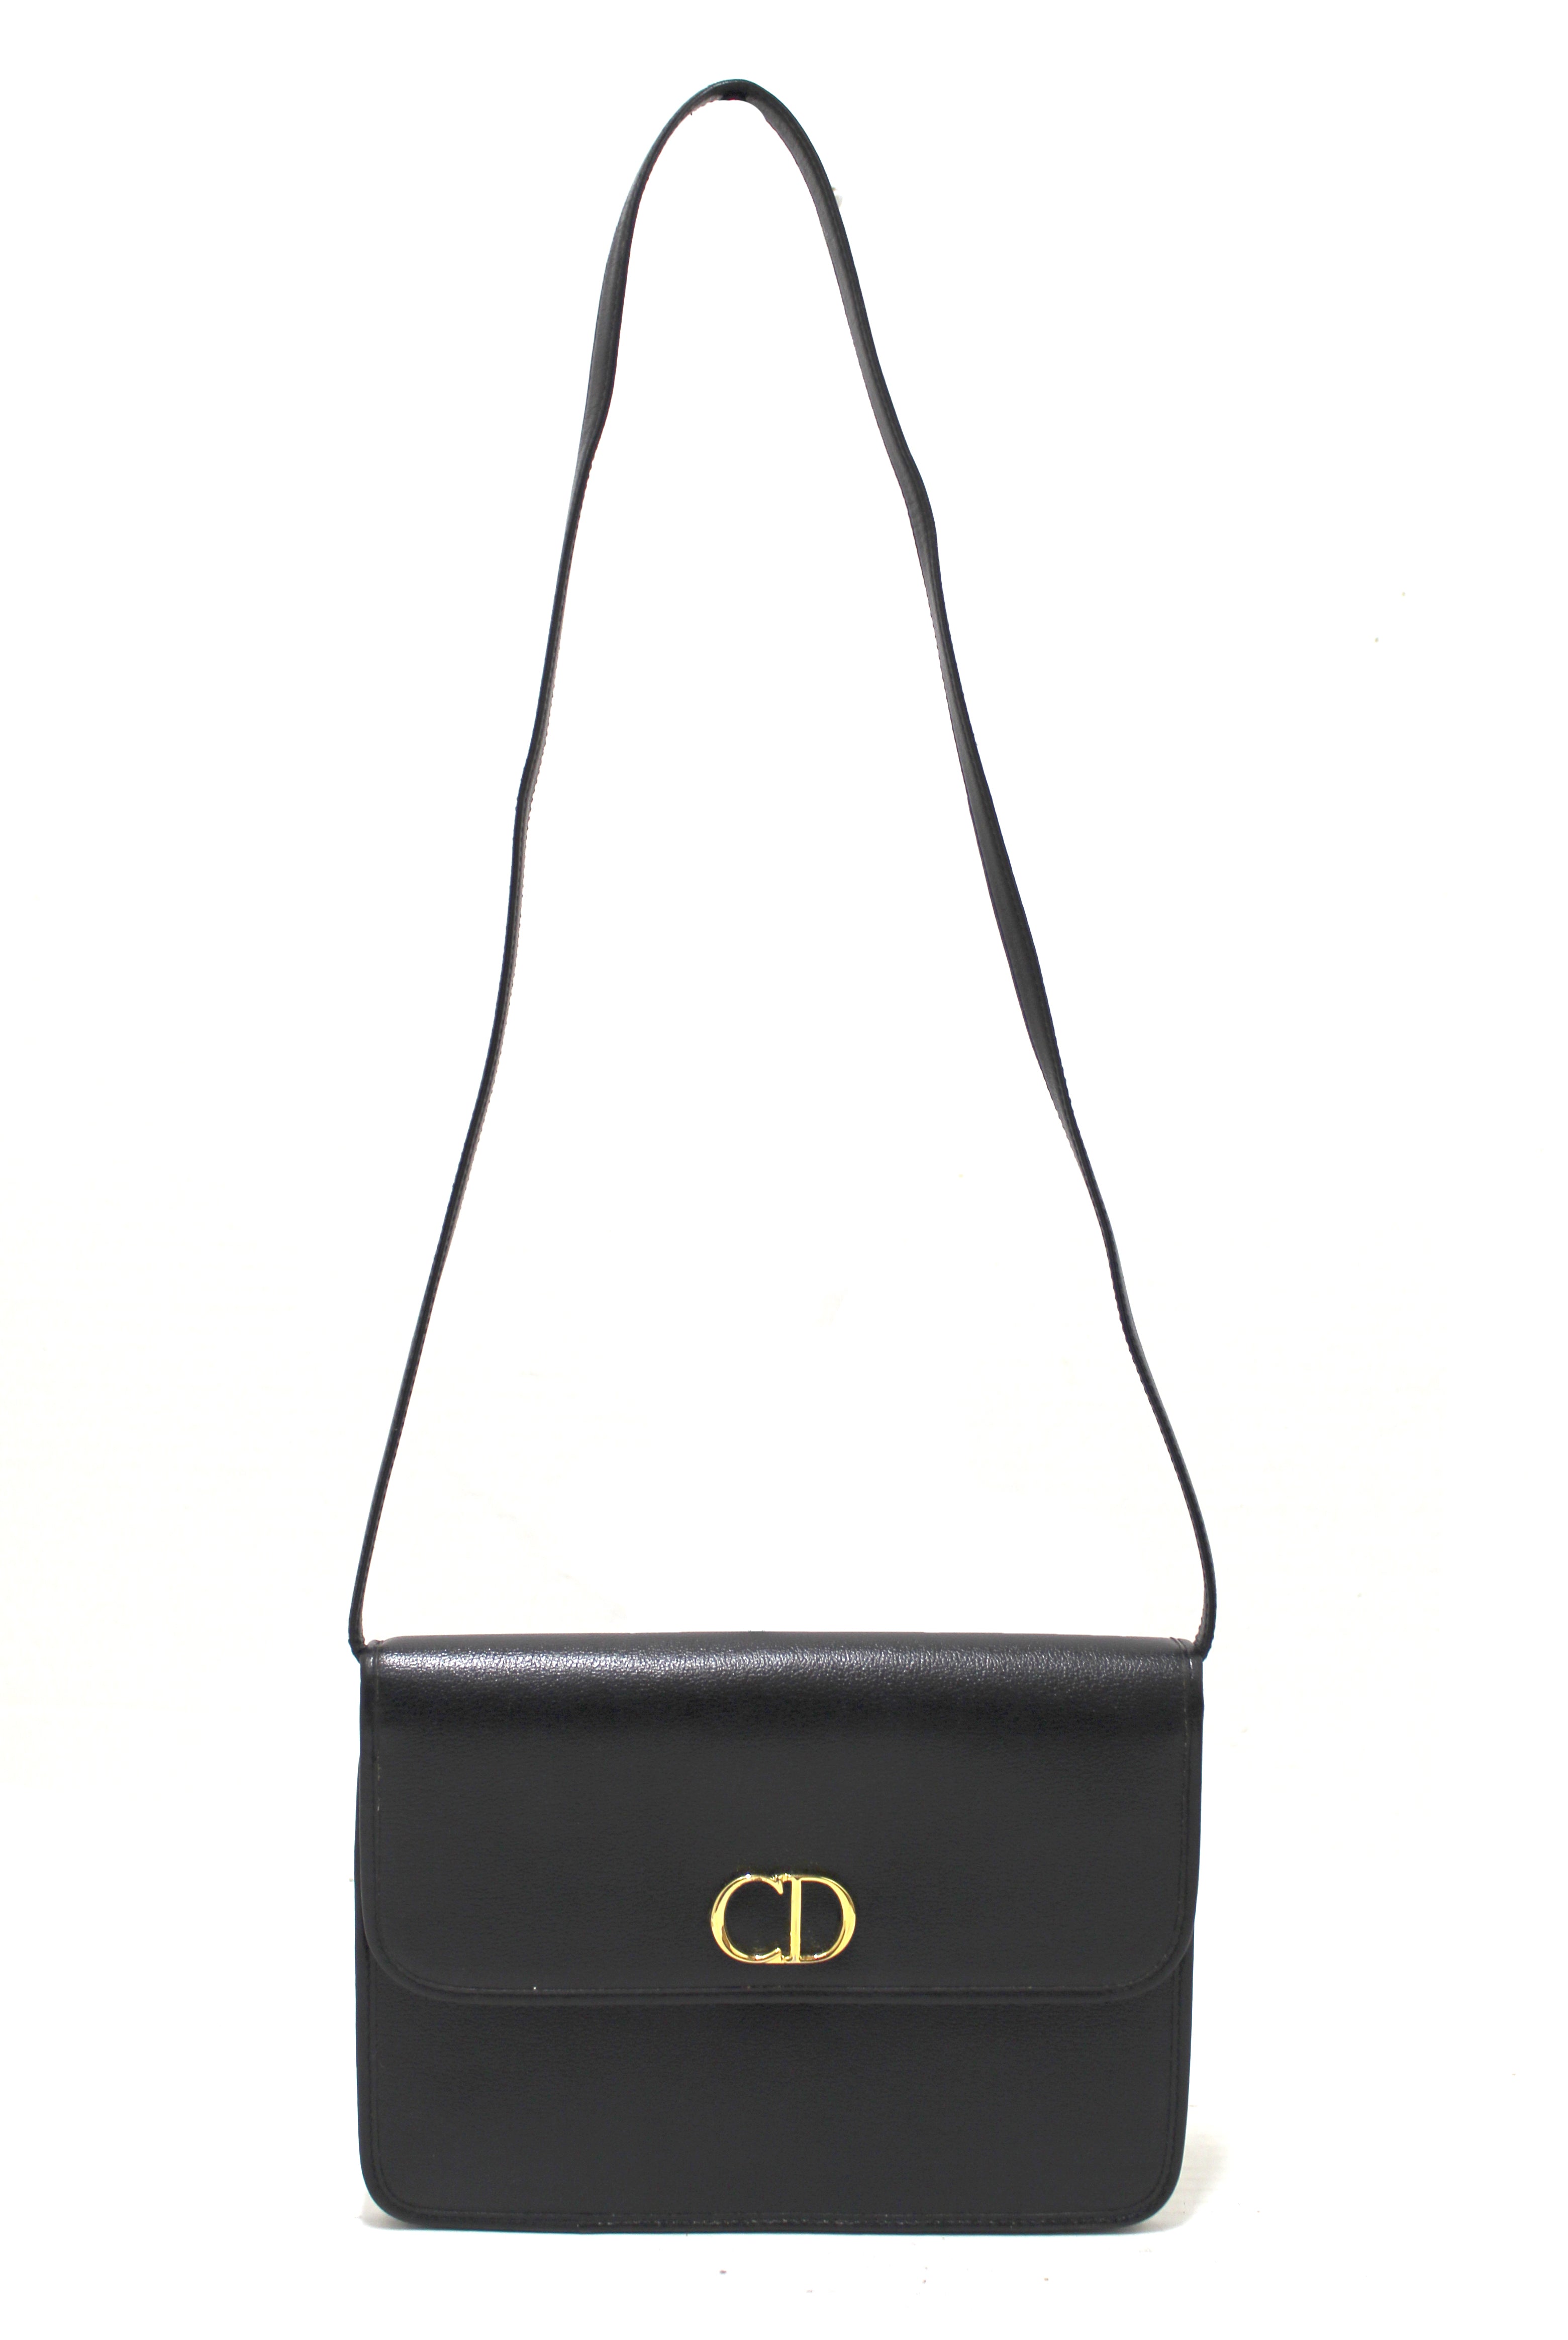 Authentic Christian Dior Vintage Black Crossbody Messenger Bag